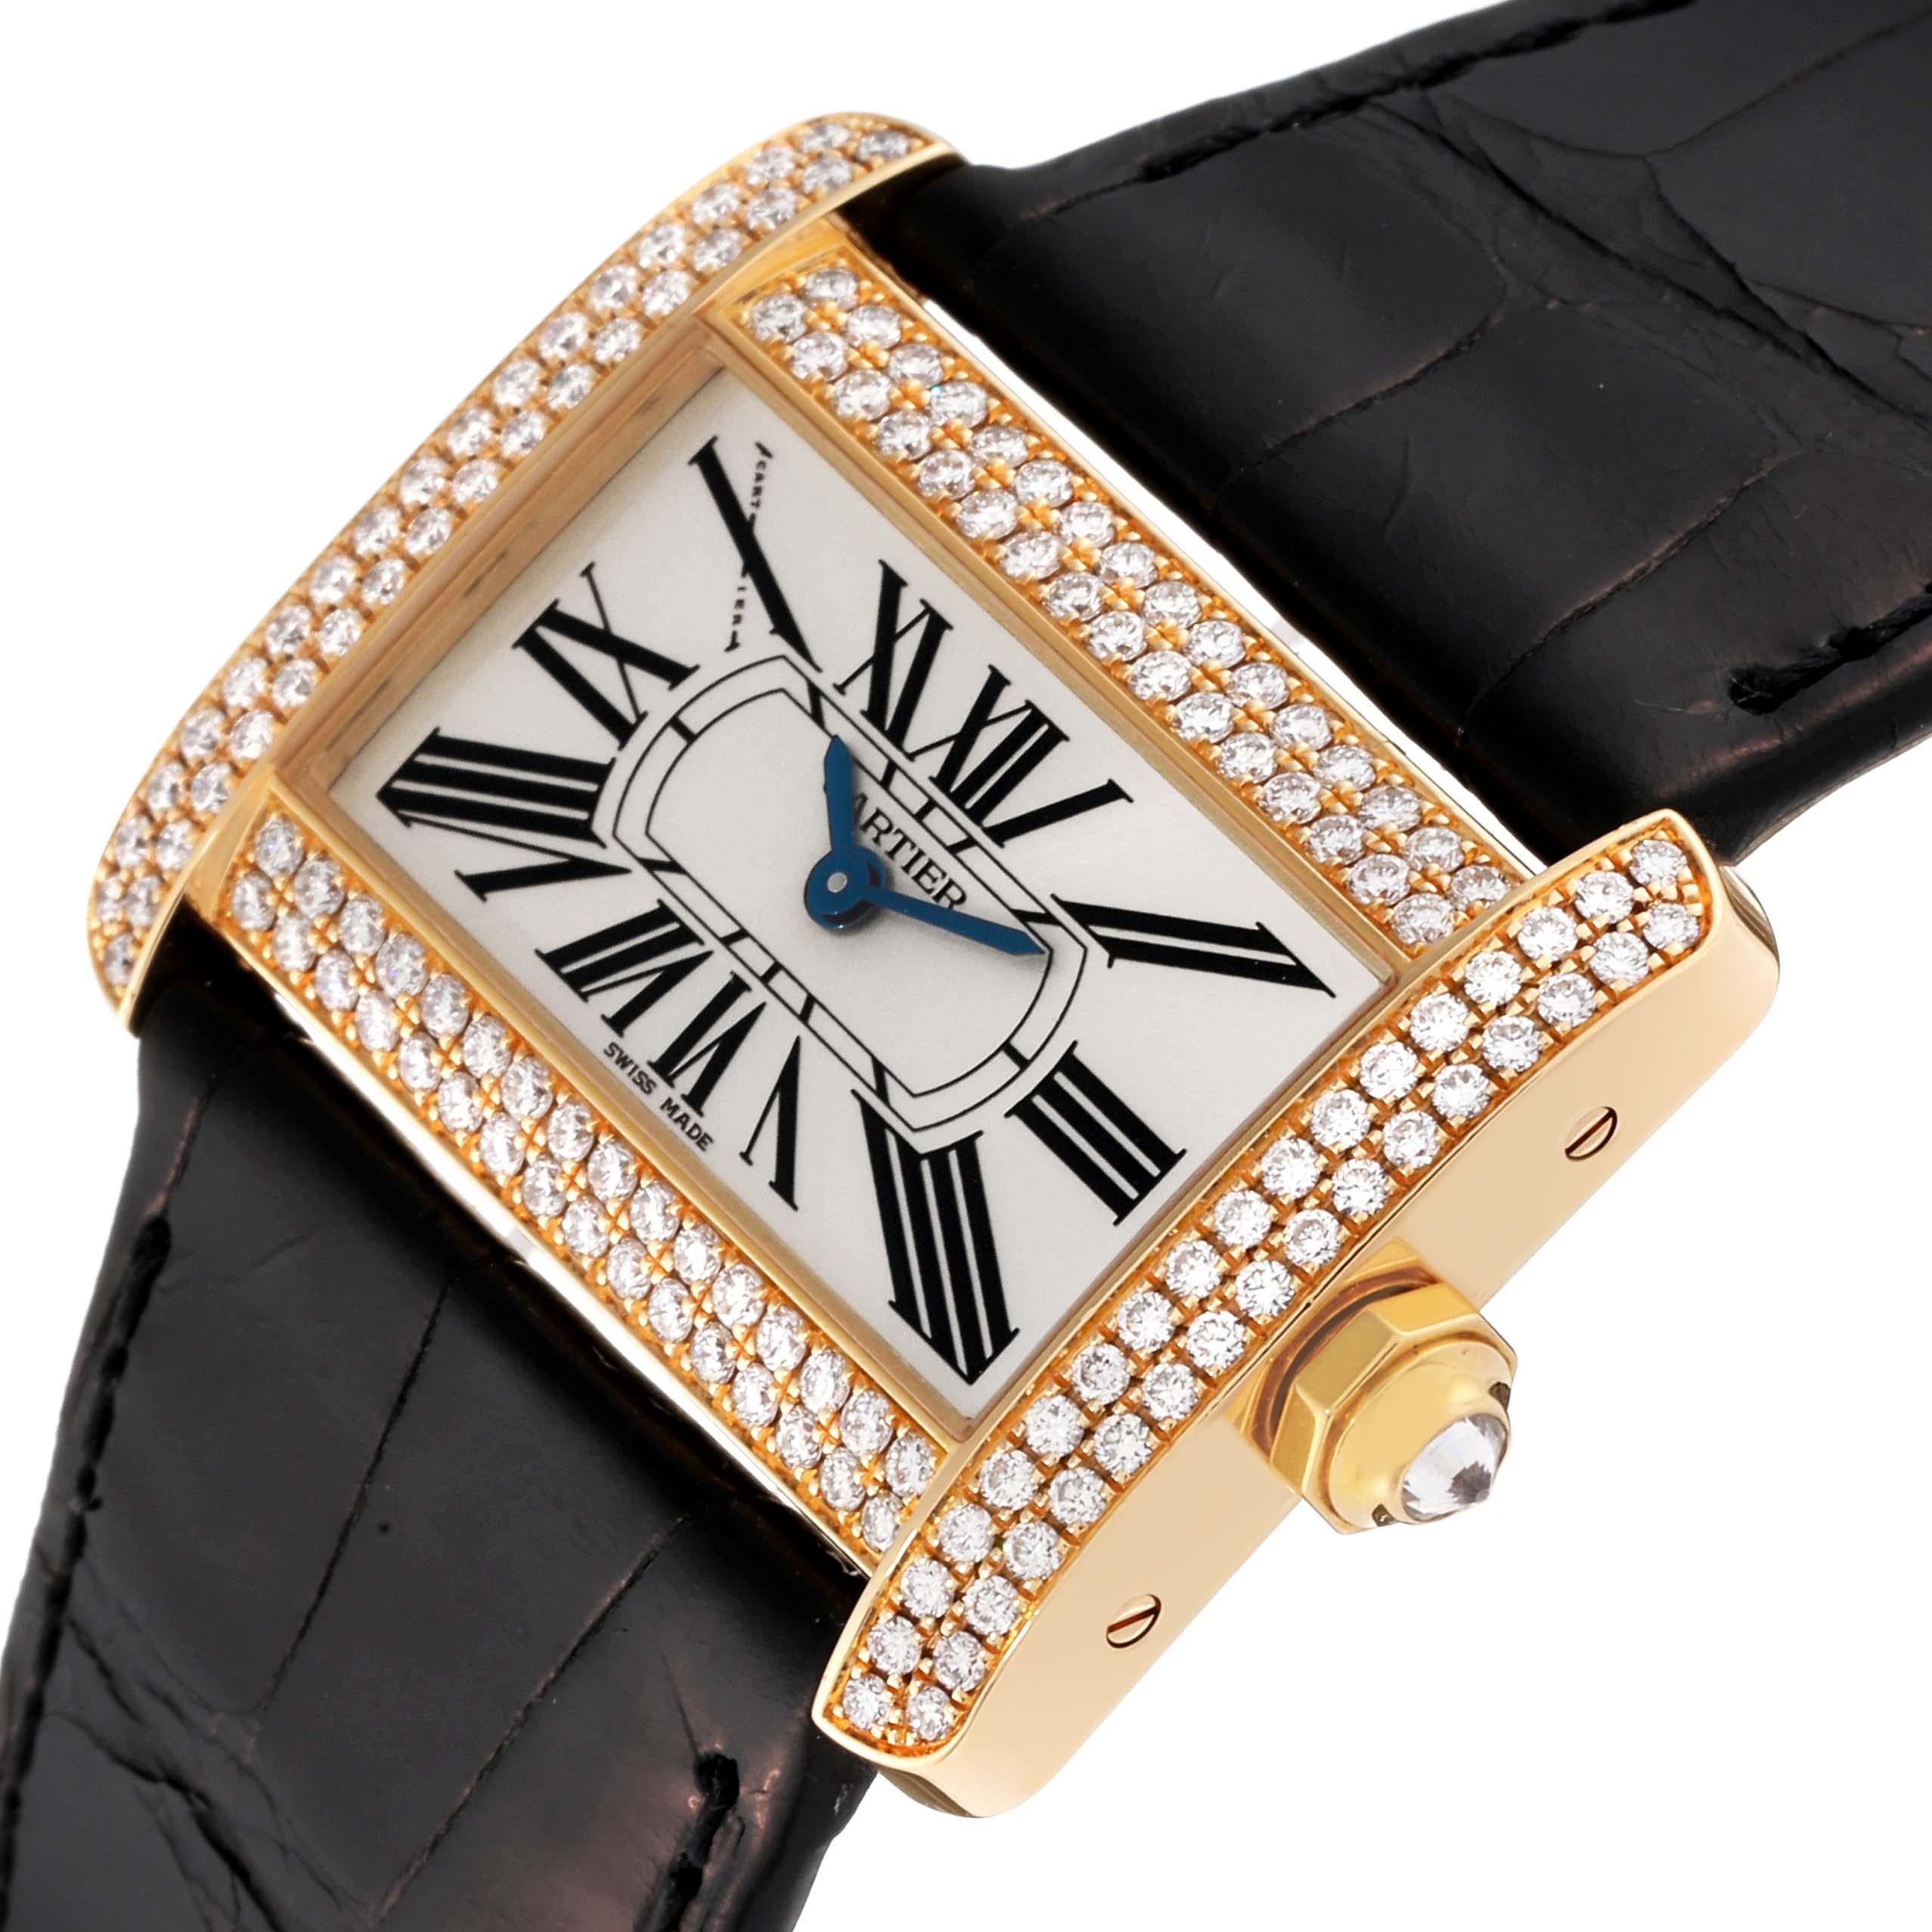 Cartier Tank Divan Yellow Gold Diamond Ladies Watch WA301036 In Excellent Condition For Sale In Atlanta, GA